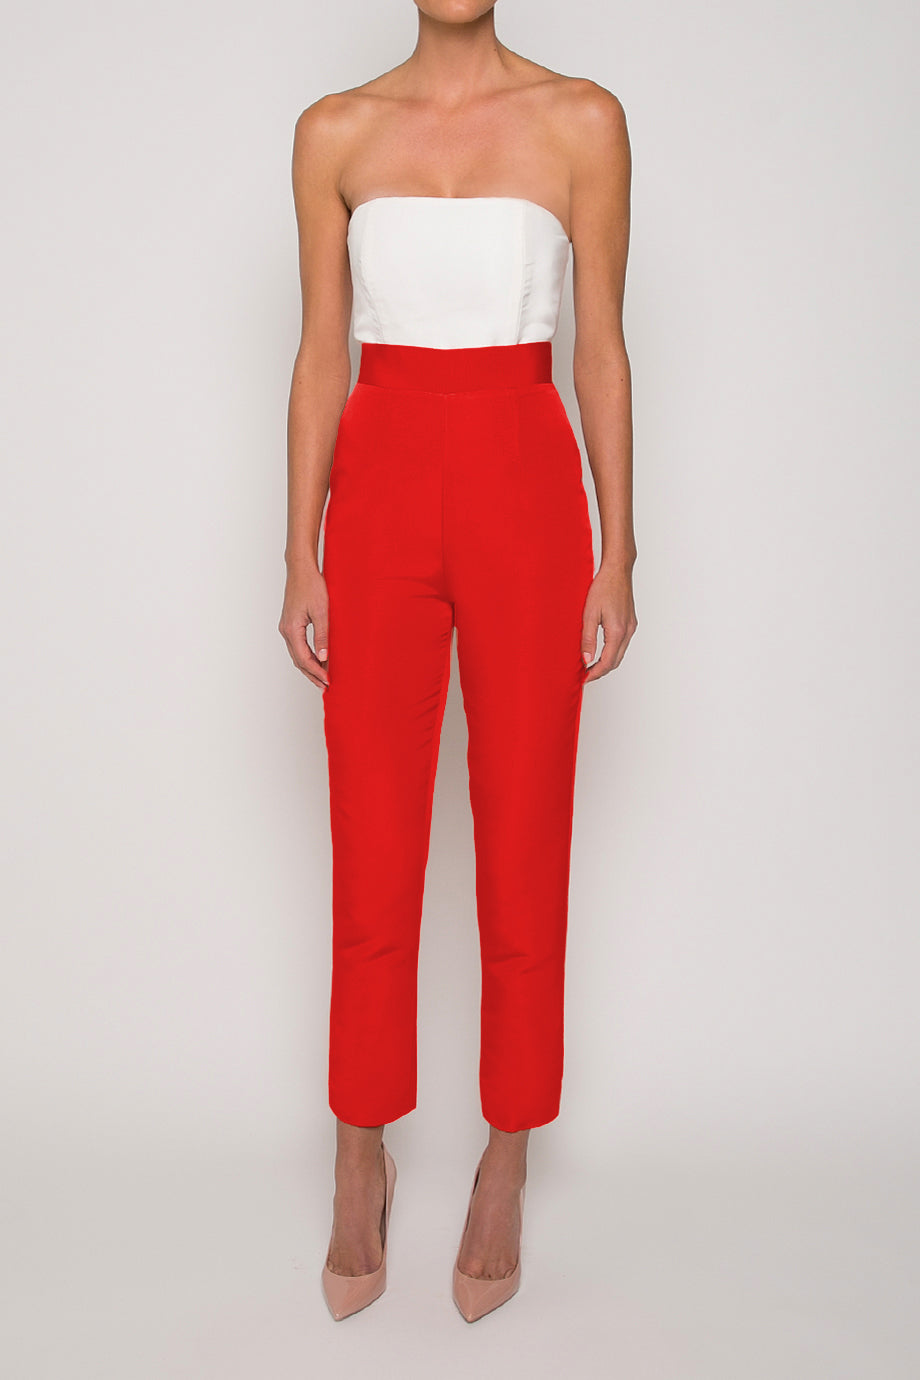 Red Dress Pants For Men | ShopStyle